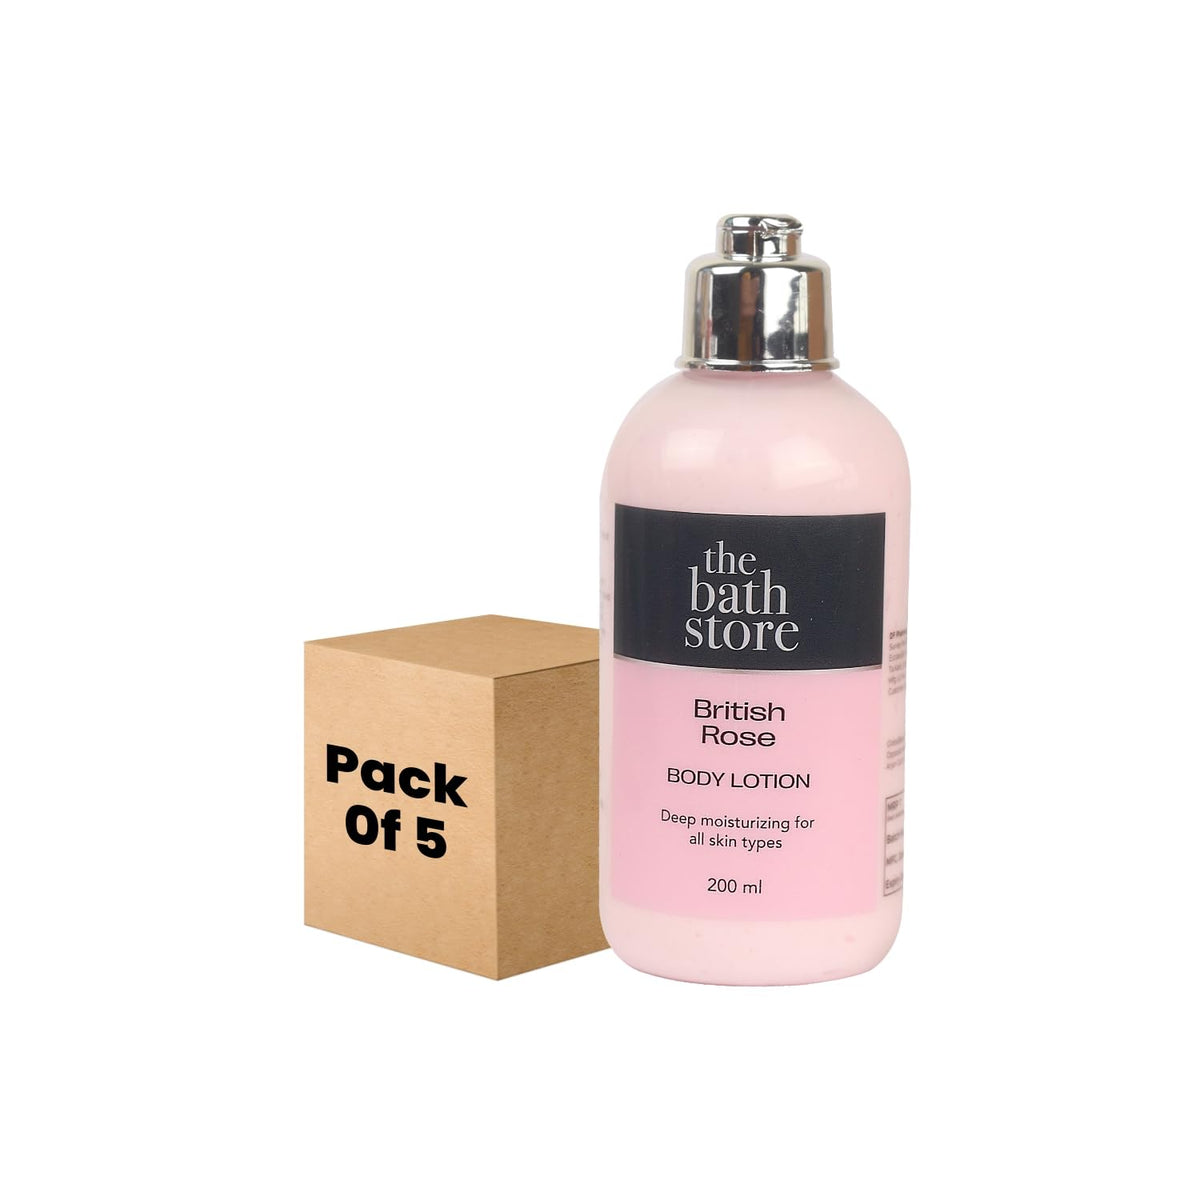 The Bath Store British Rose Body Lotion - Nourishing | Moisture-Locking | Anti-Aging | Women and Men - 200ml (Pack of 5)